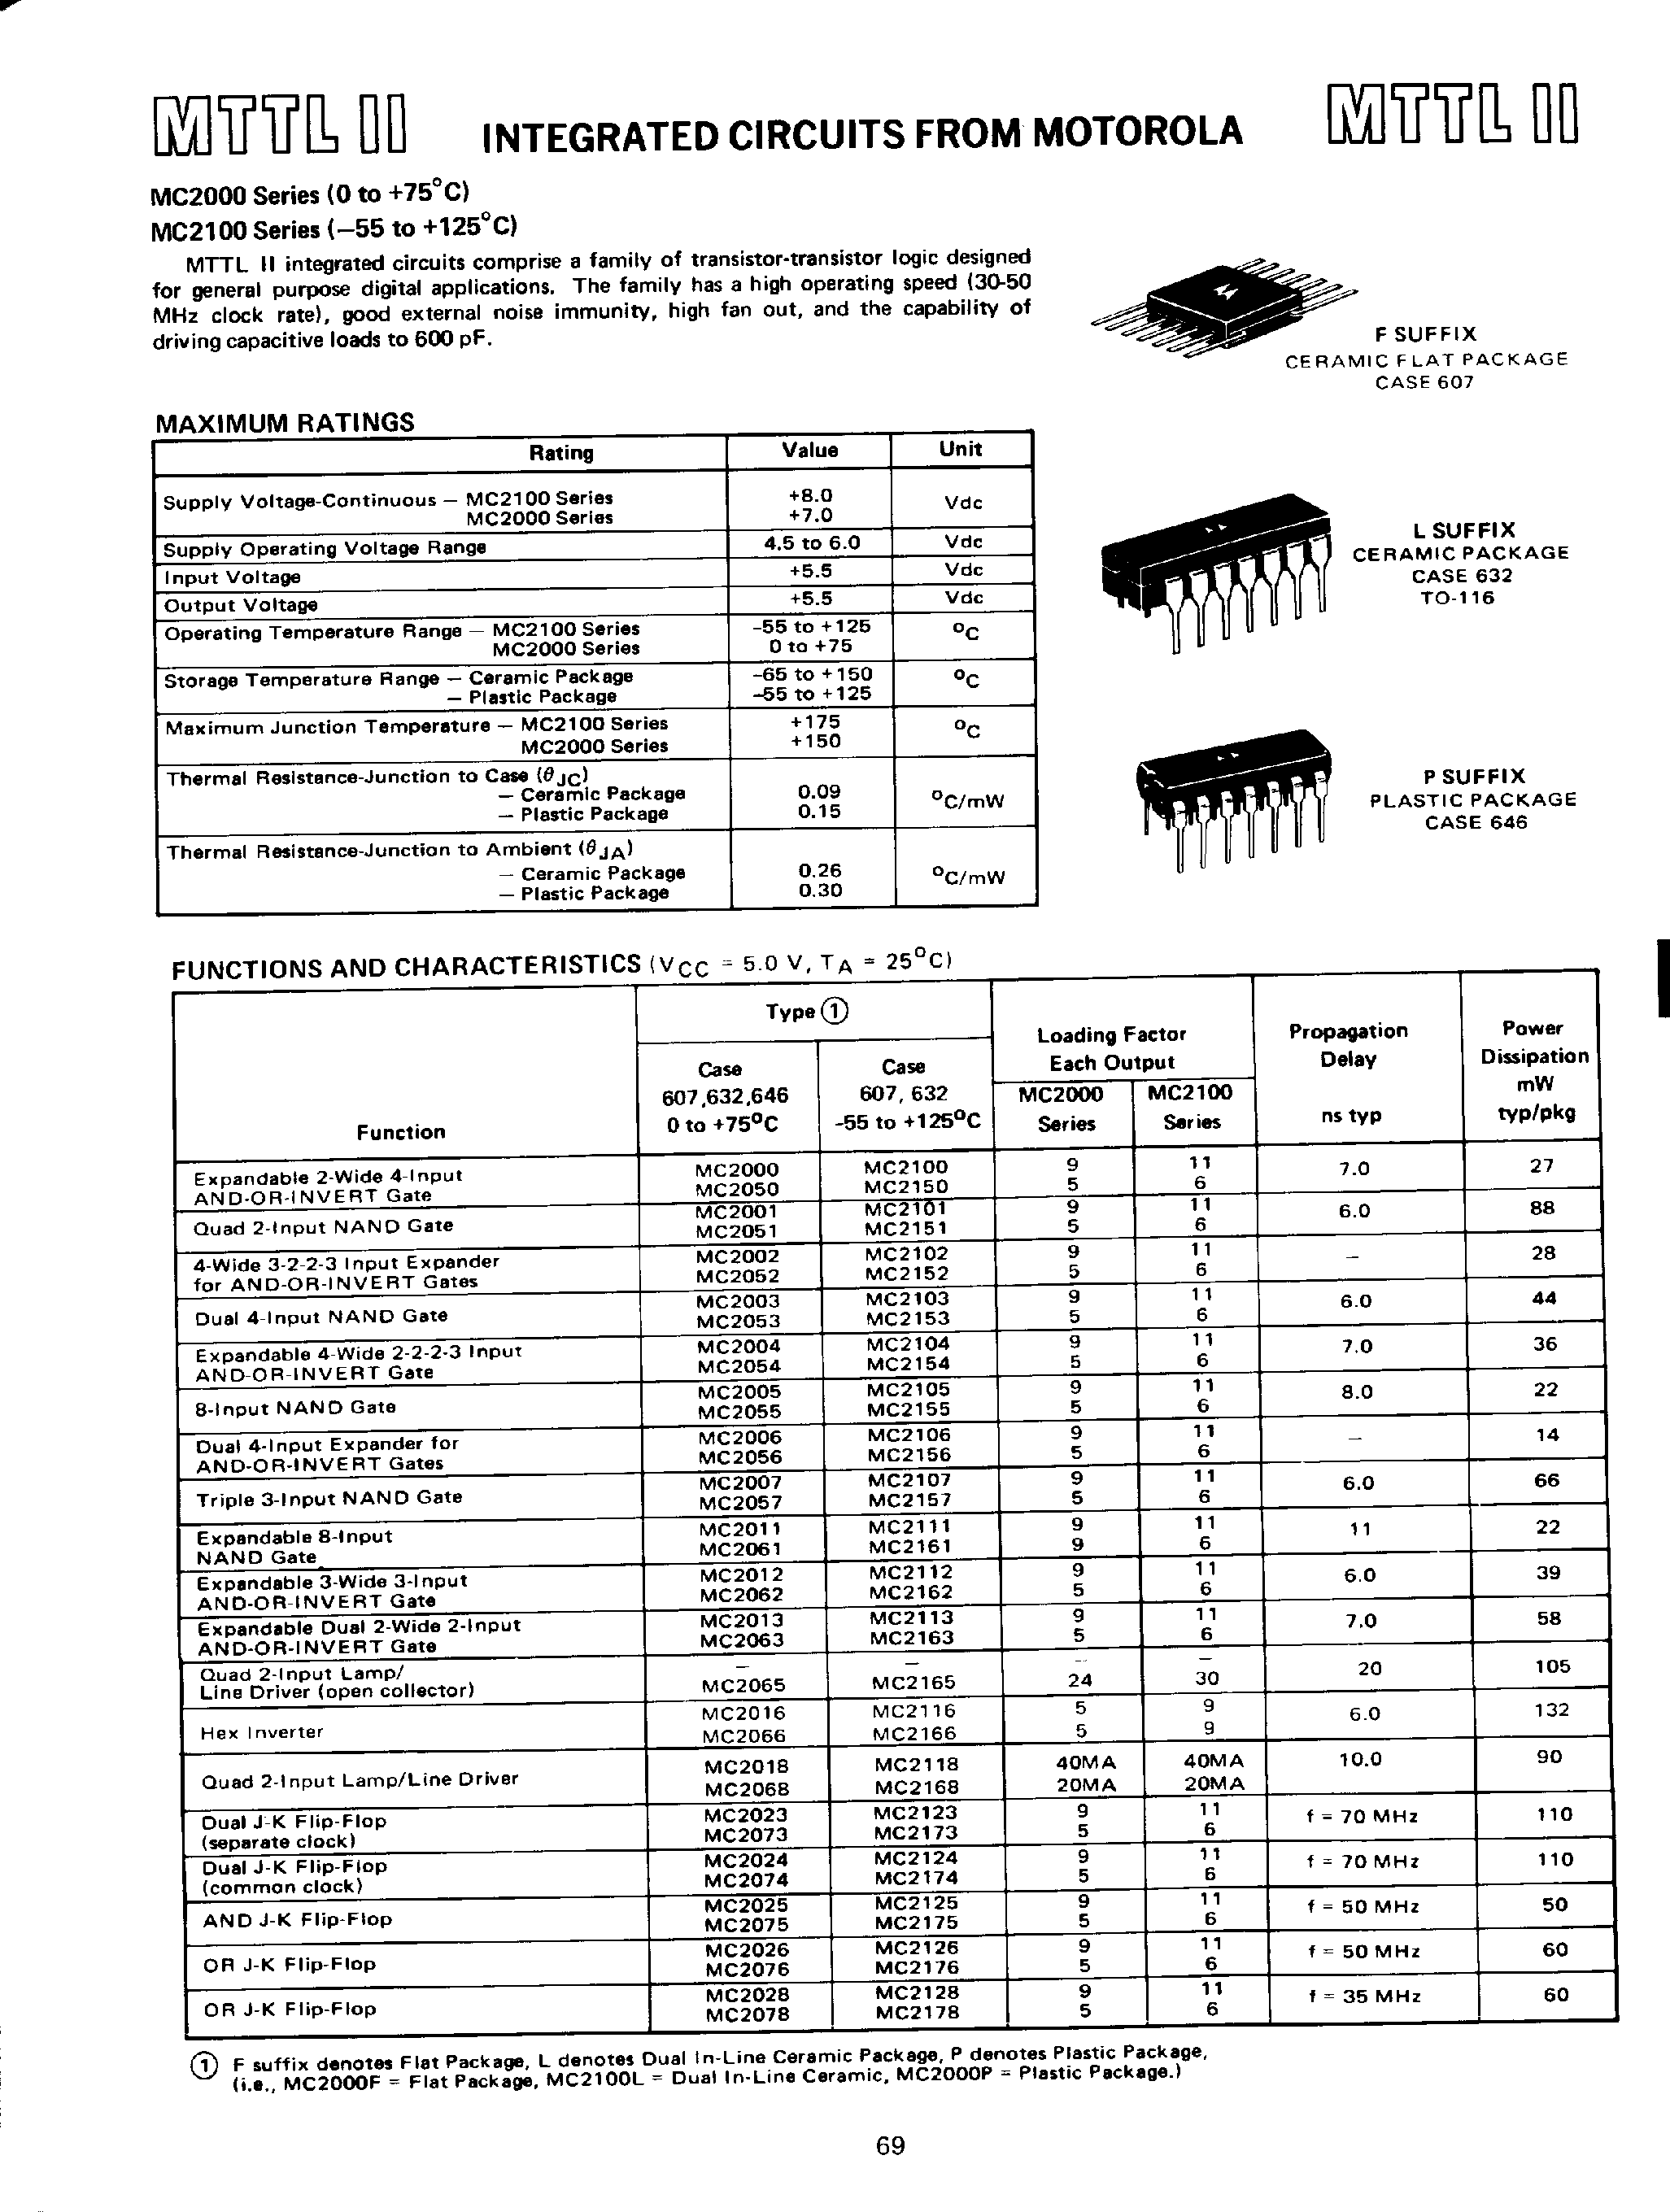 Datasheet MC2162 - (MC2000 Series) MTTL II Integrated Circuits page 1